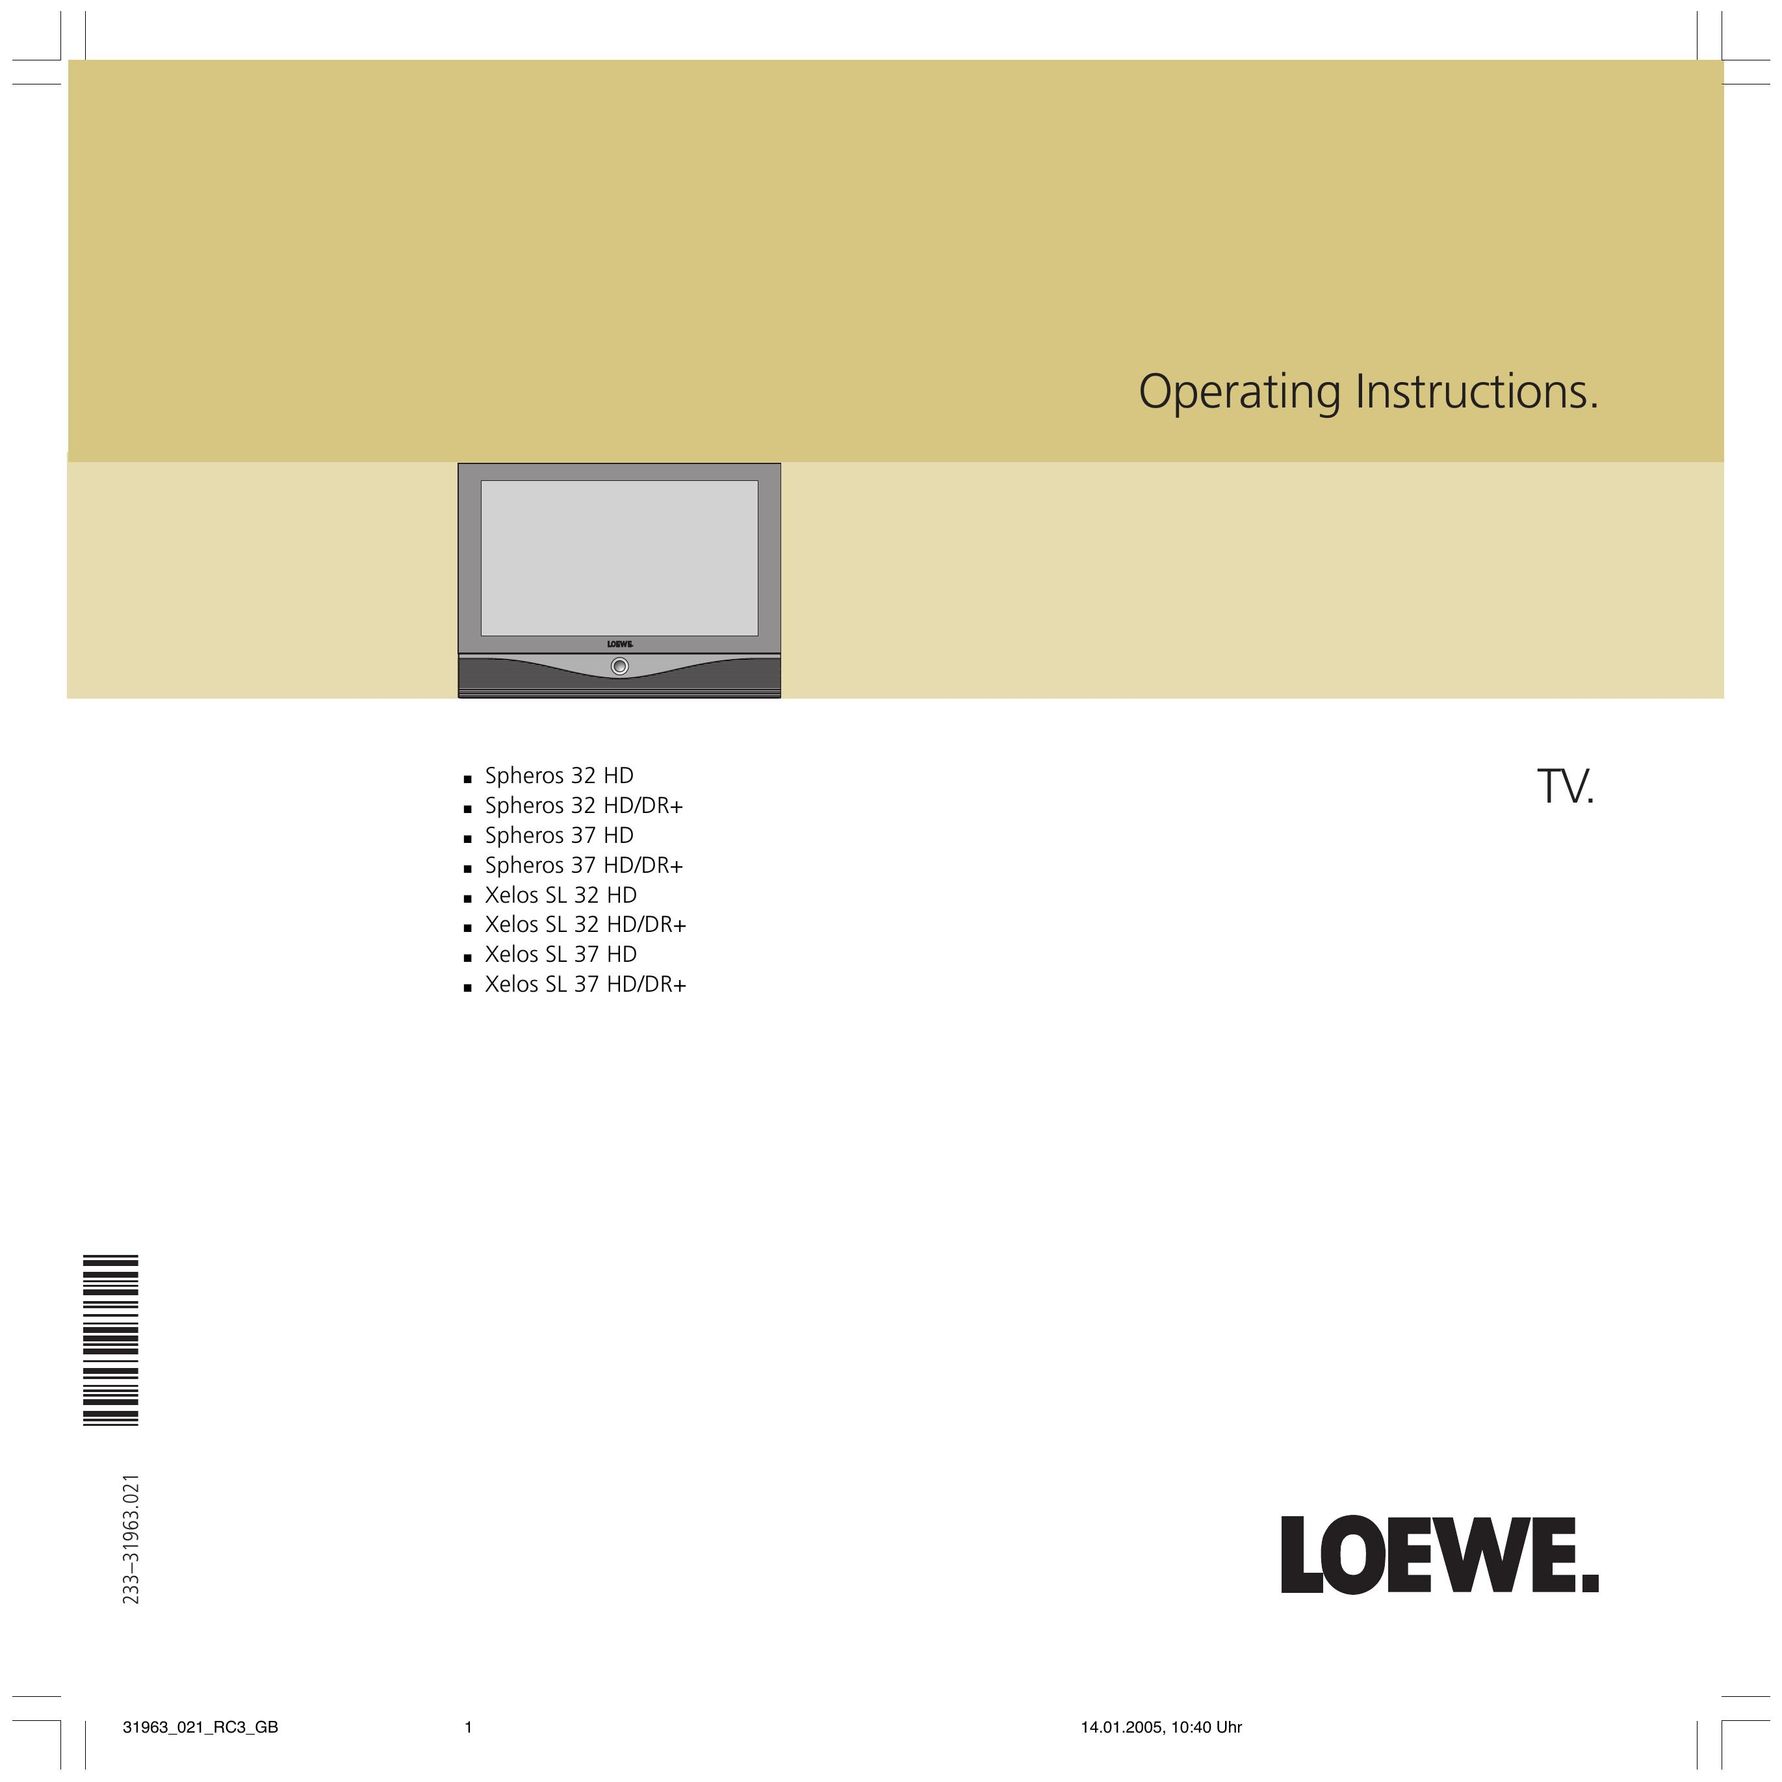 Loewe 32 HD Flat Panel Television User Manual